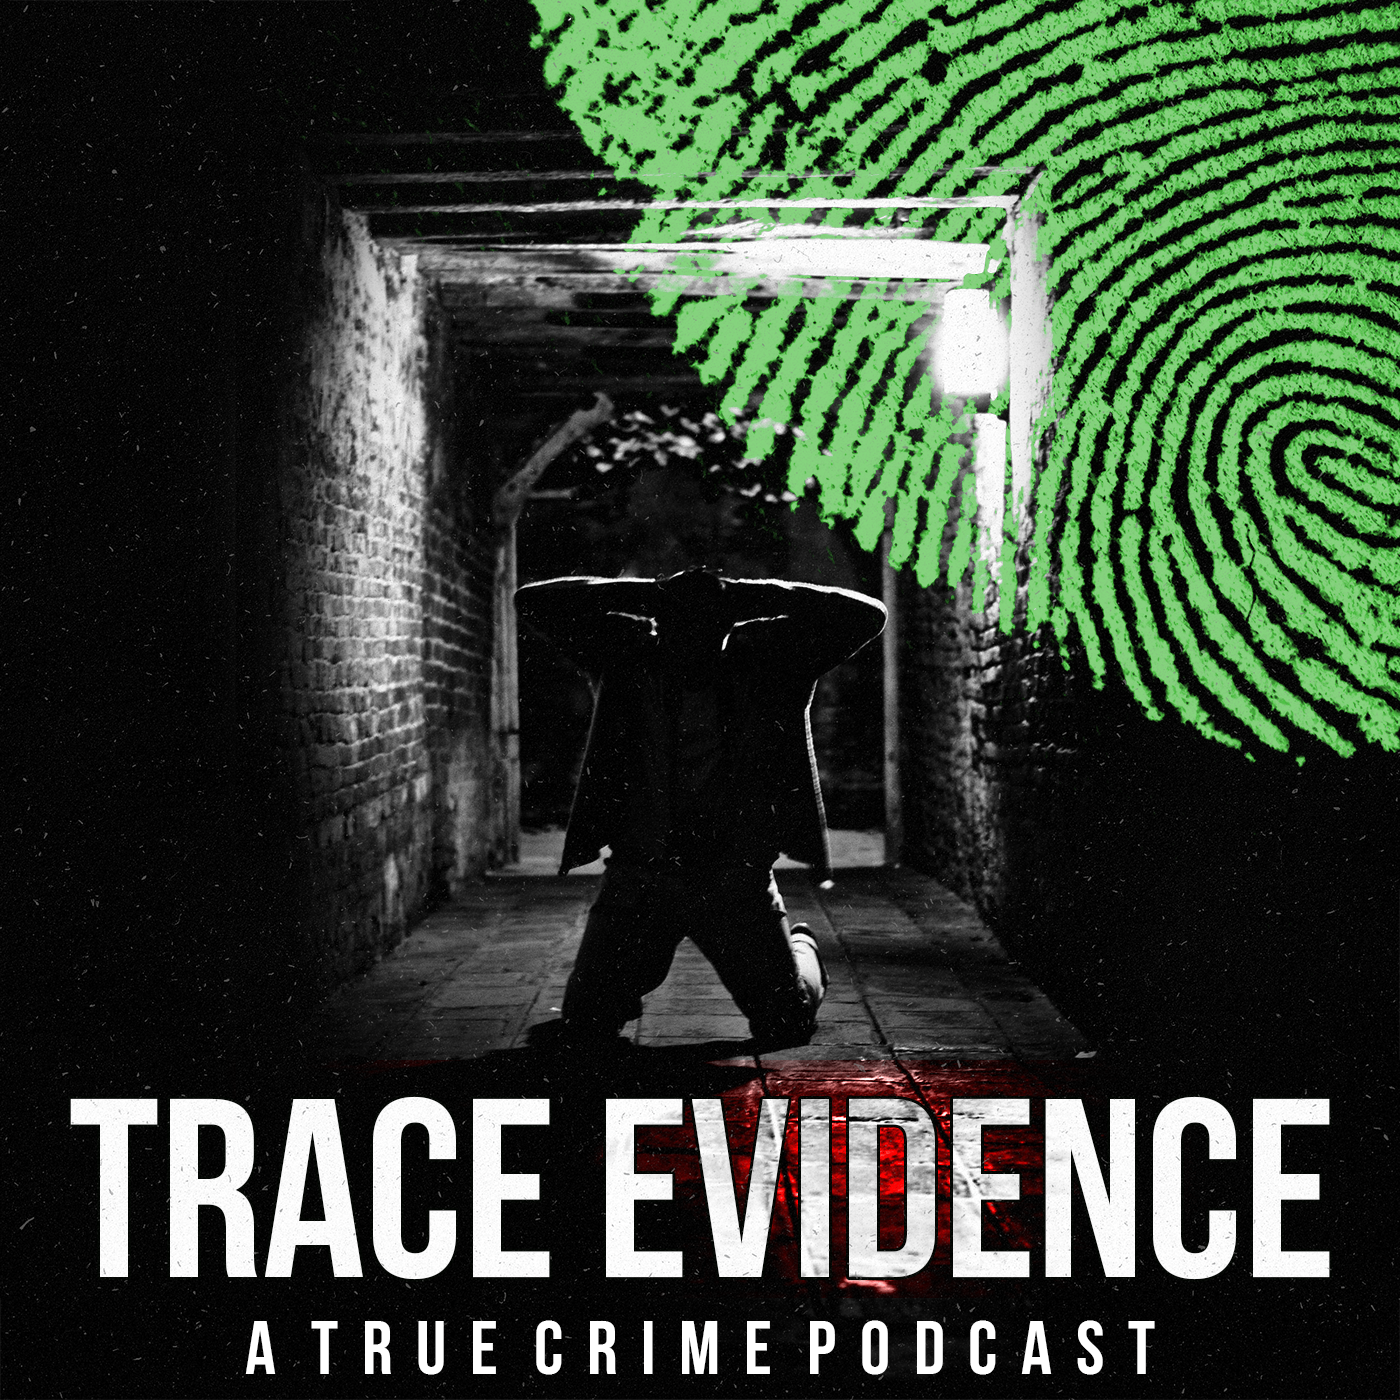 www.trace-evidence.com